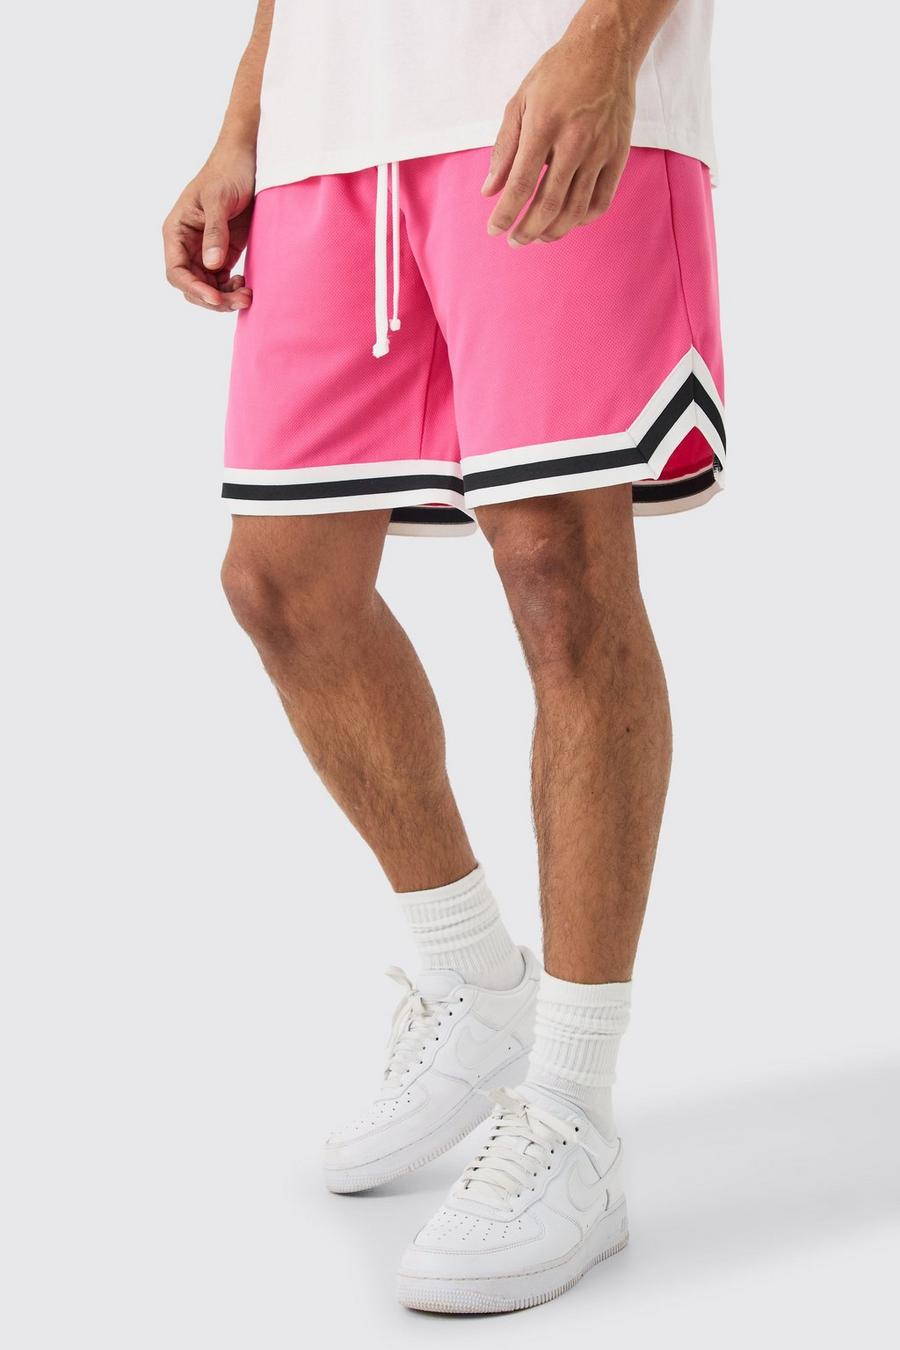 Pantalón corto holgado de malla estilo baloncesto, Pink